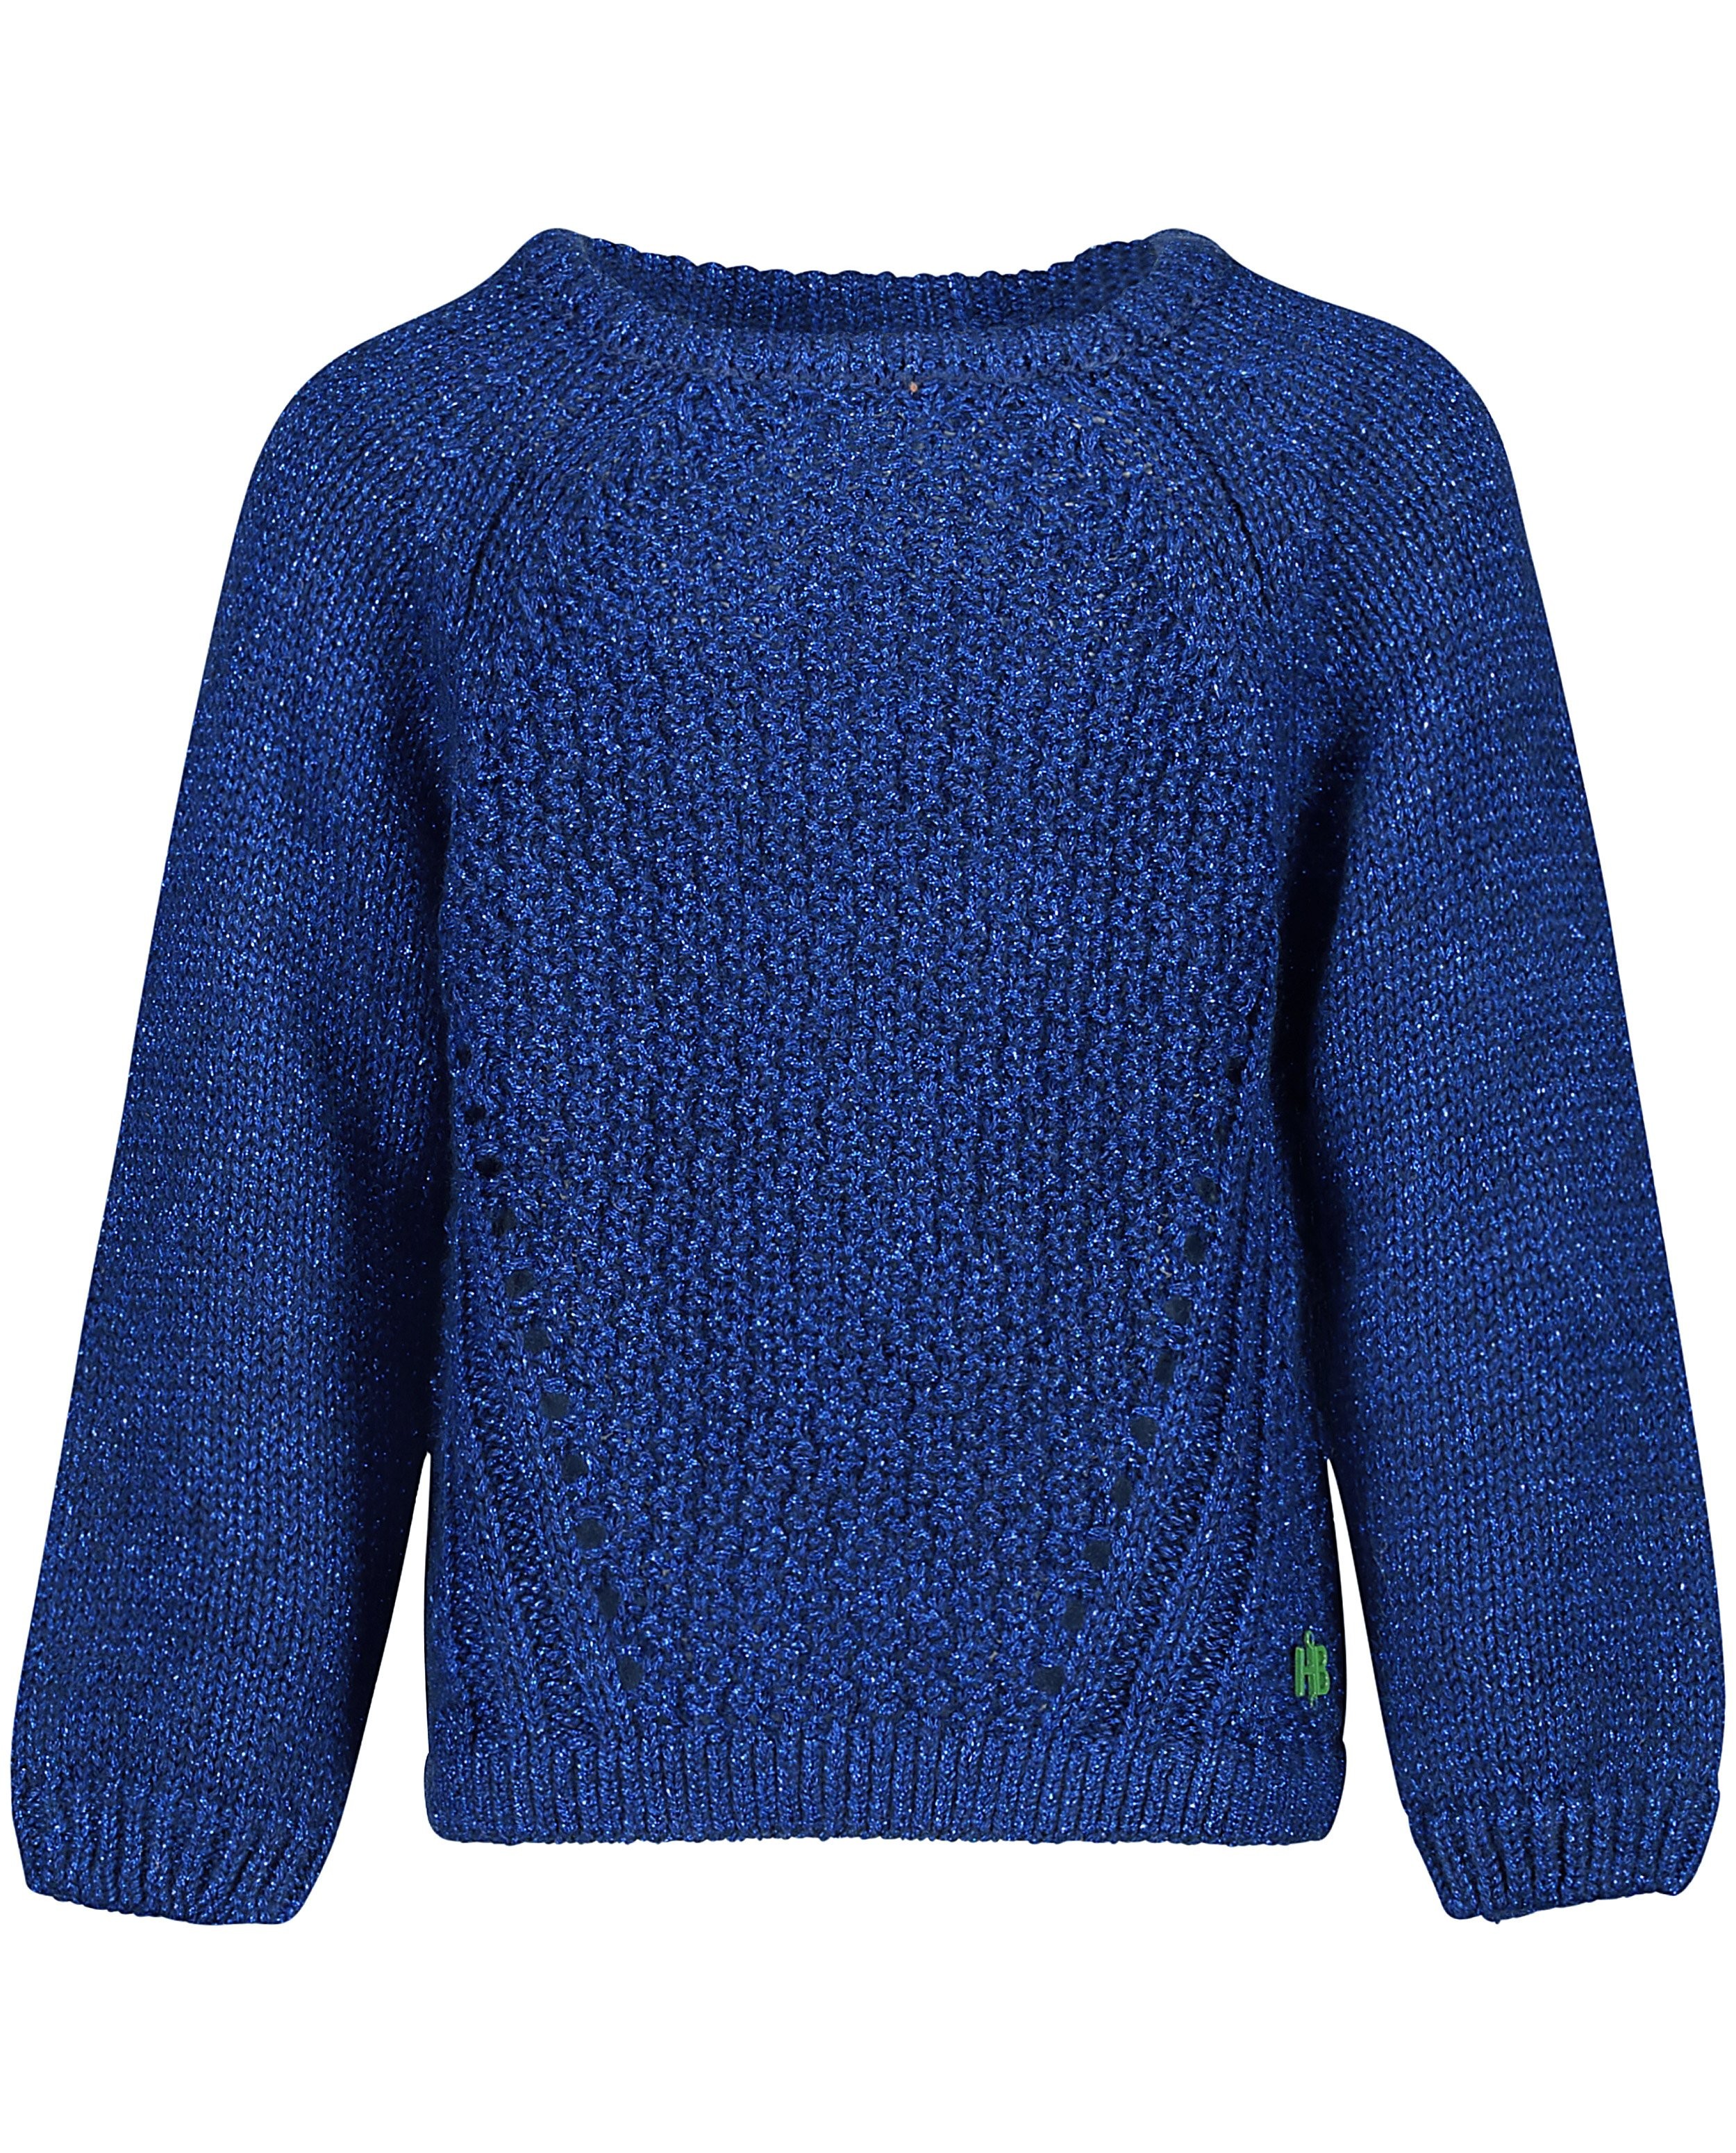 Cardigans - Koningsblauwe trui